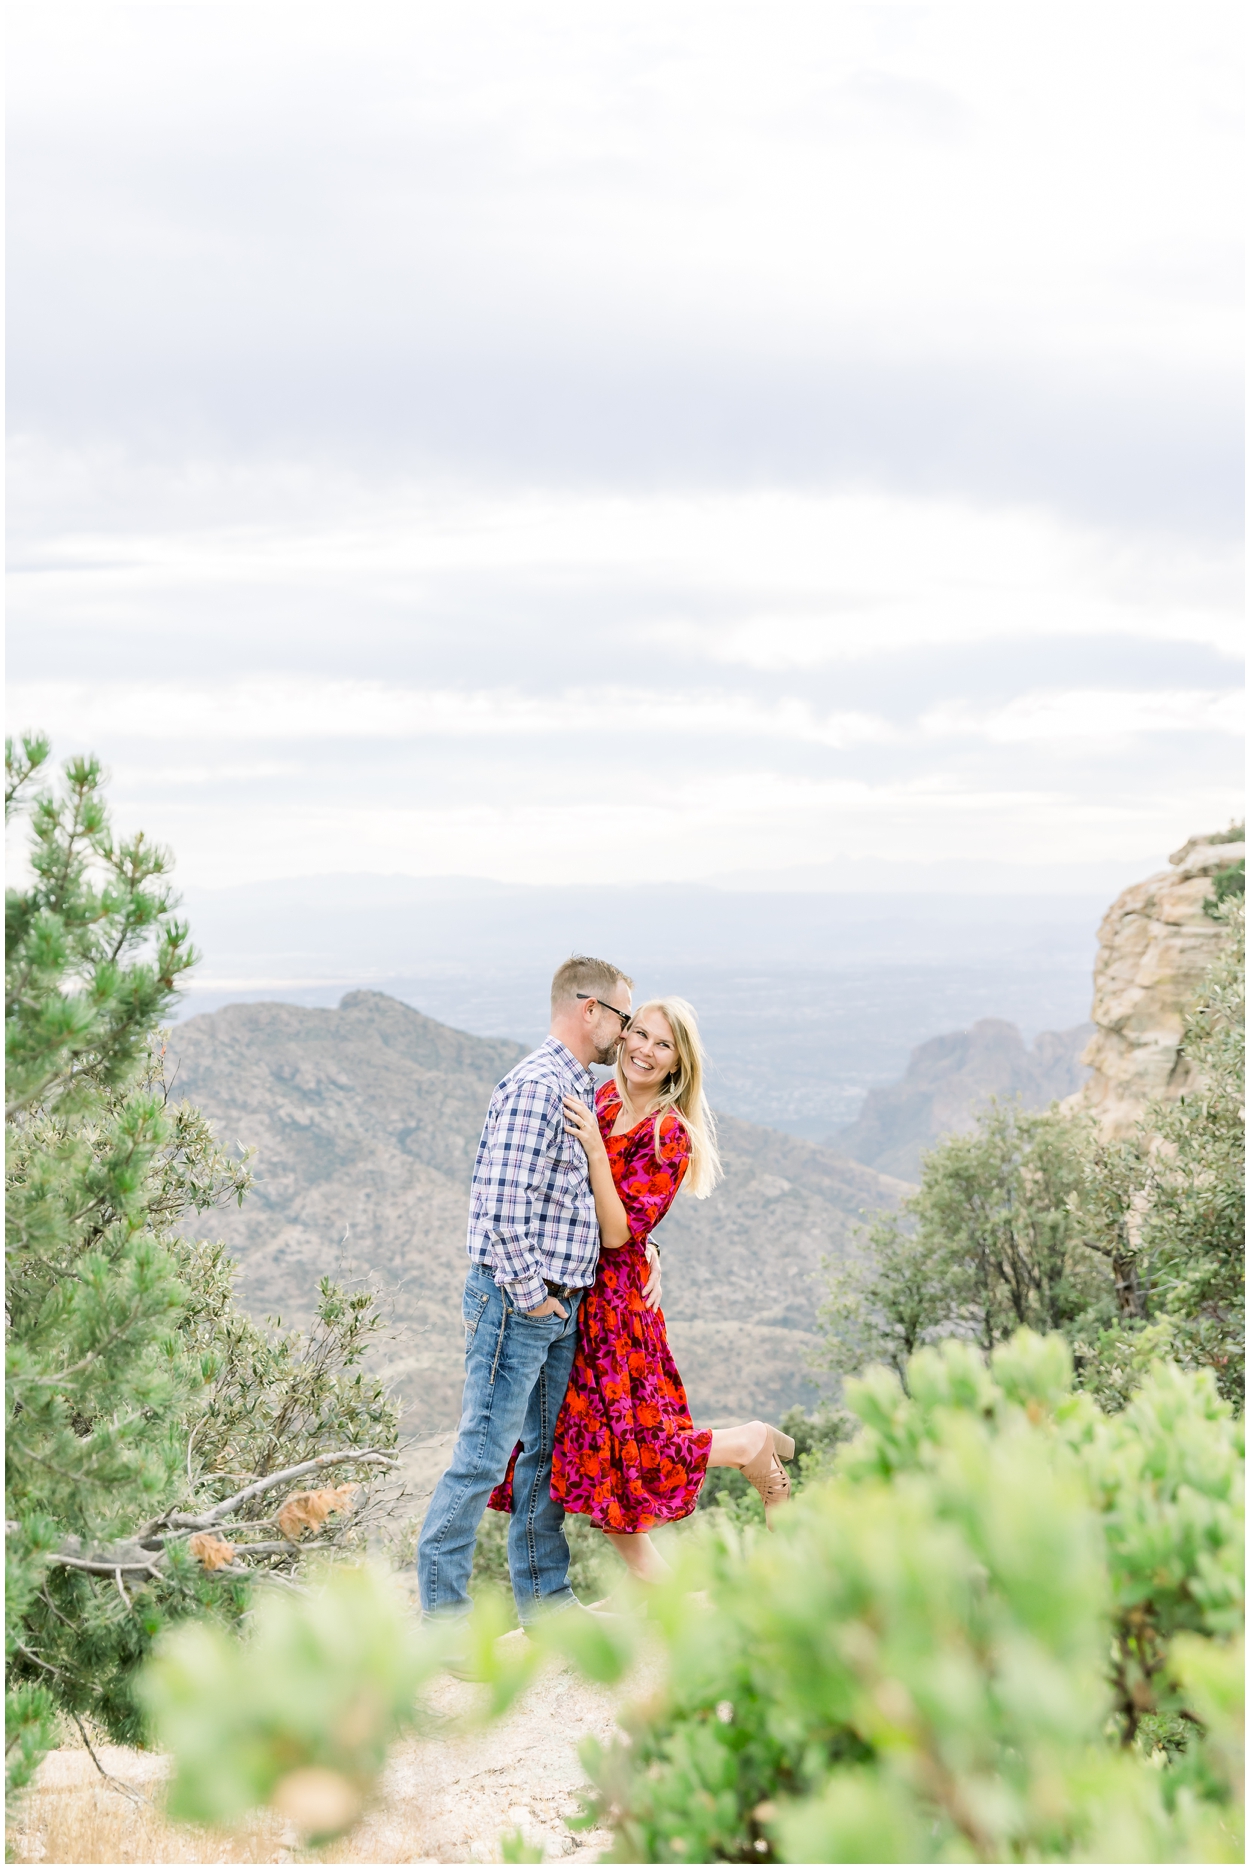 Mount Lemmon Engagement Pictures, couple smiling